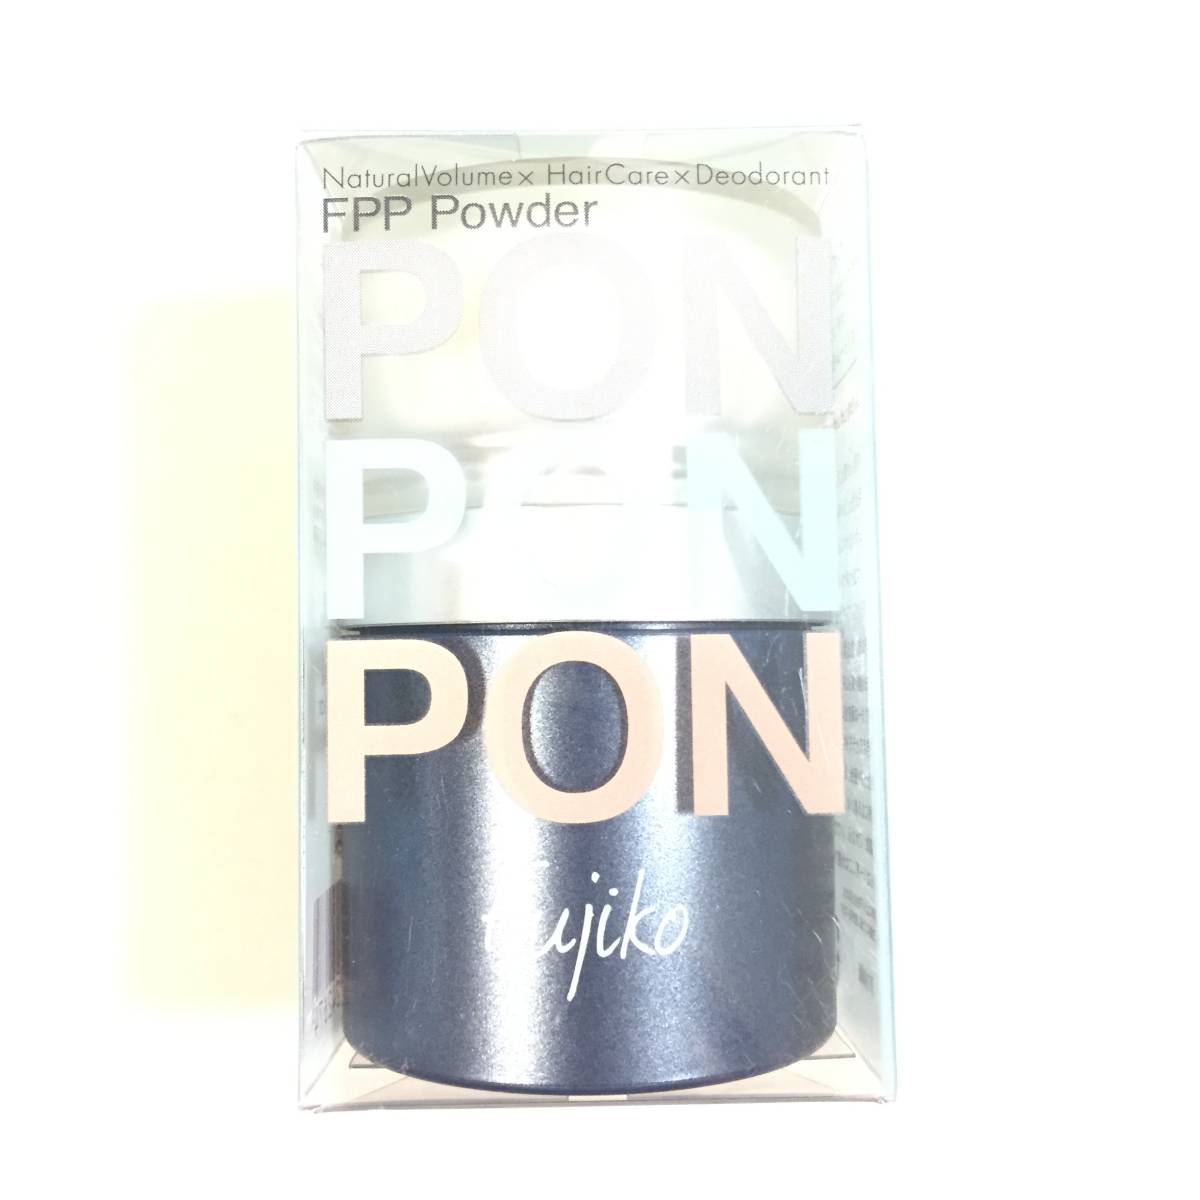  new goods prompt decision *Fujiko Fuji koFPP powder ( hair powder )*pompon powder stock last 